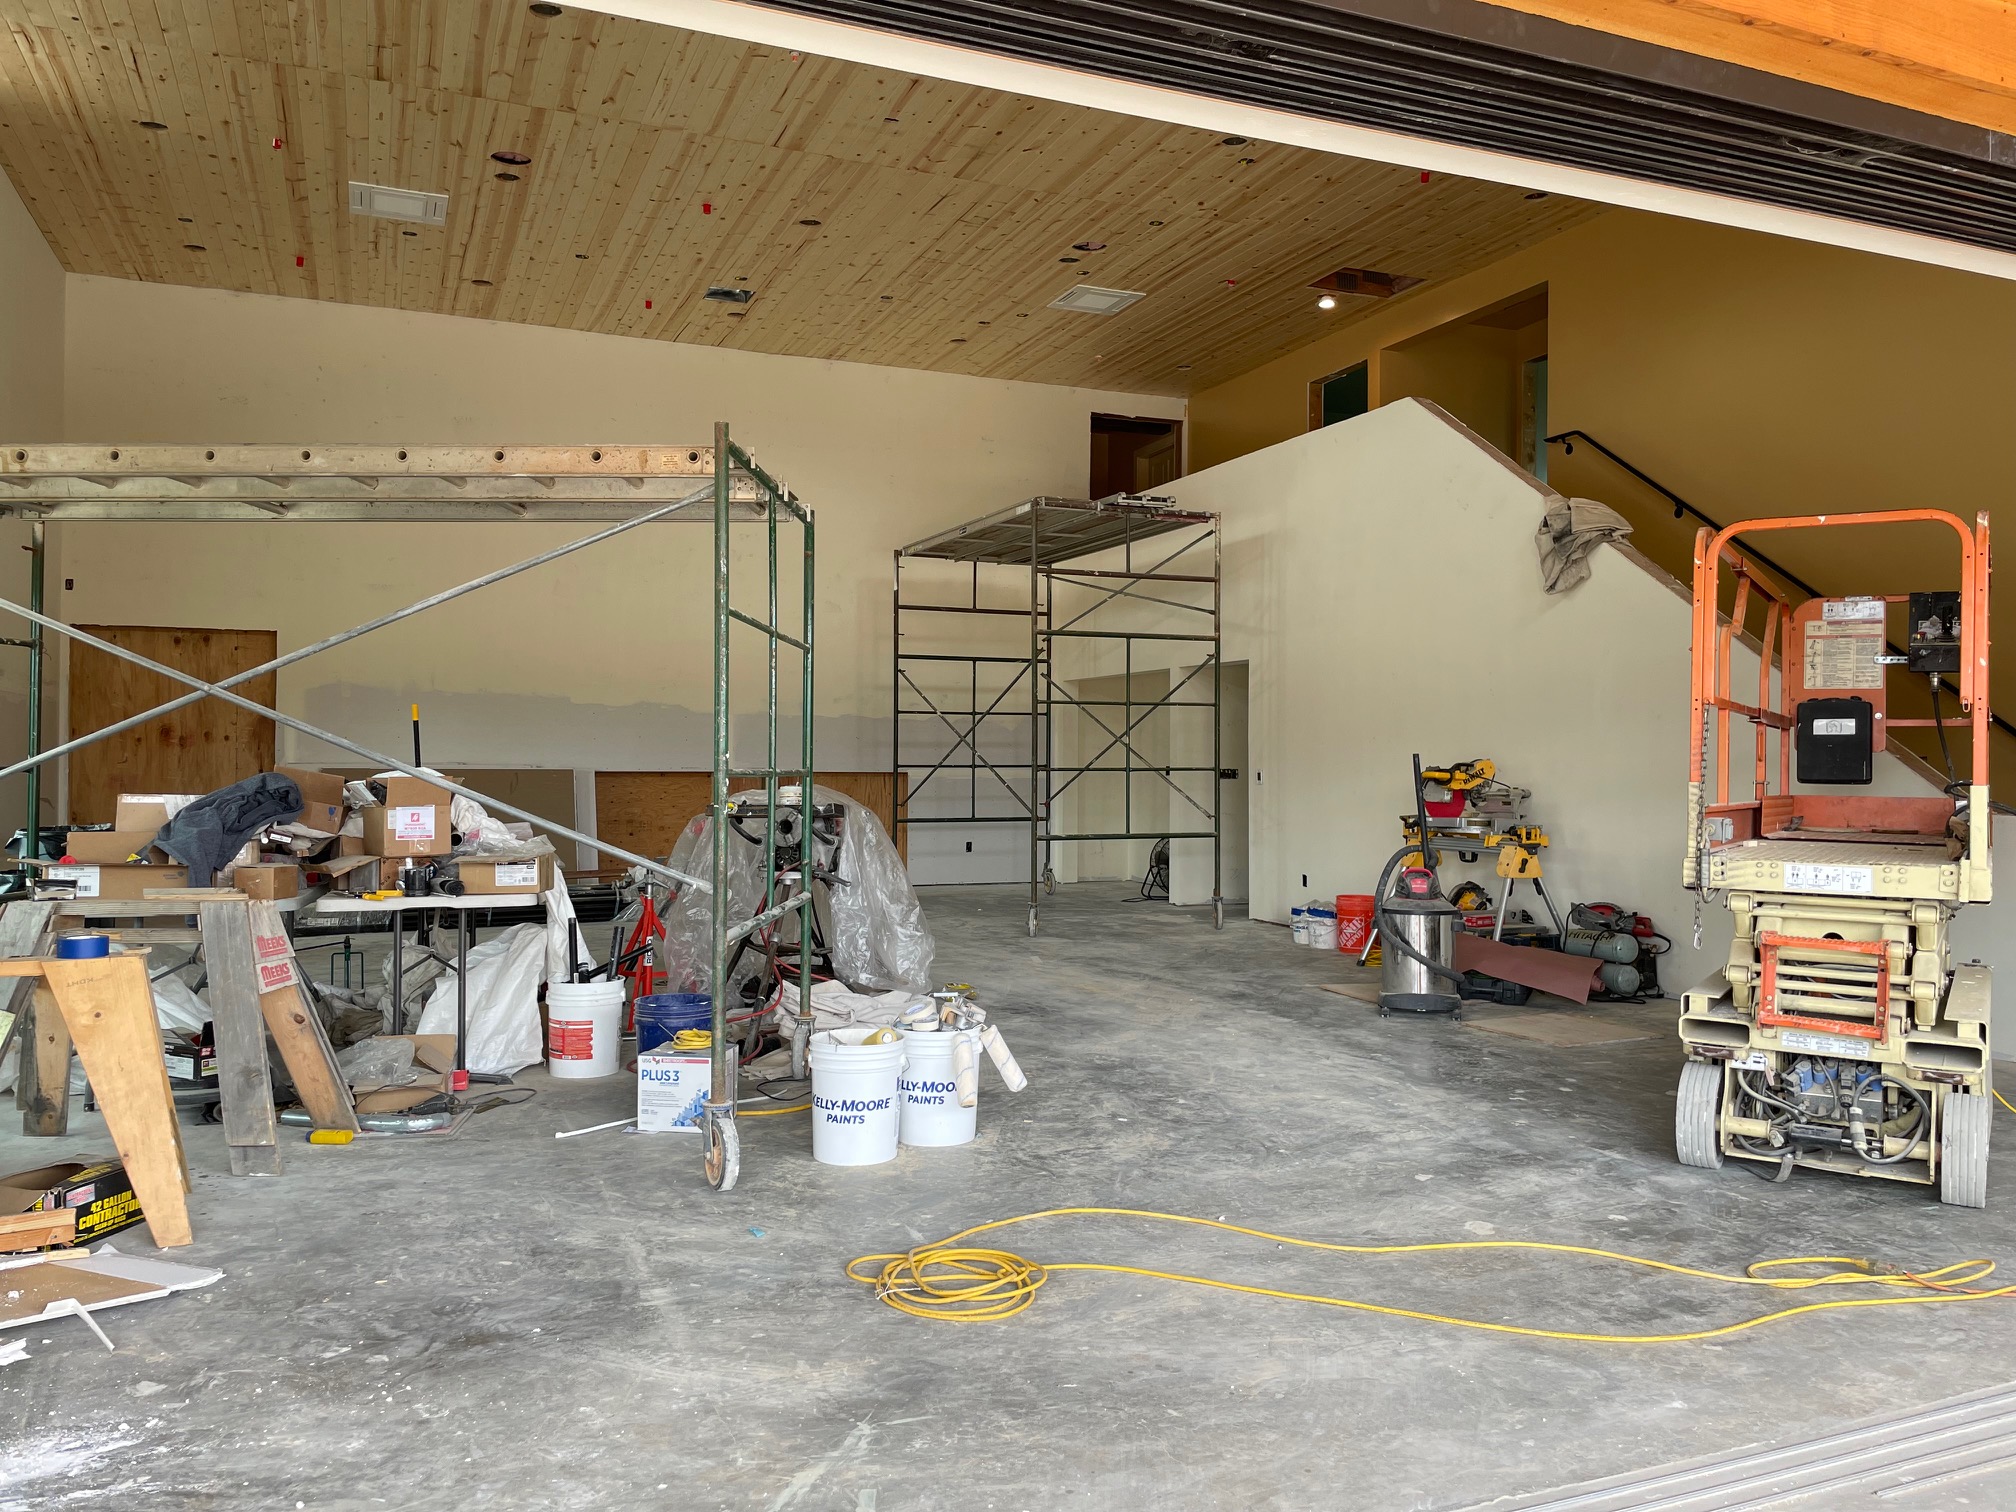 New tasting room under construction at Jeff Runquist Wines